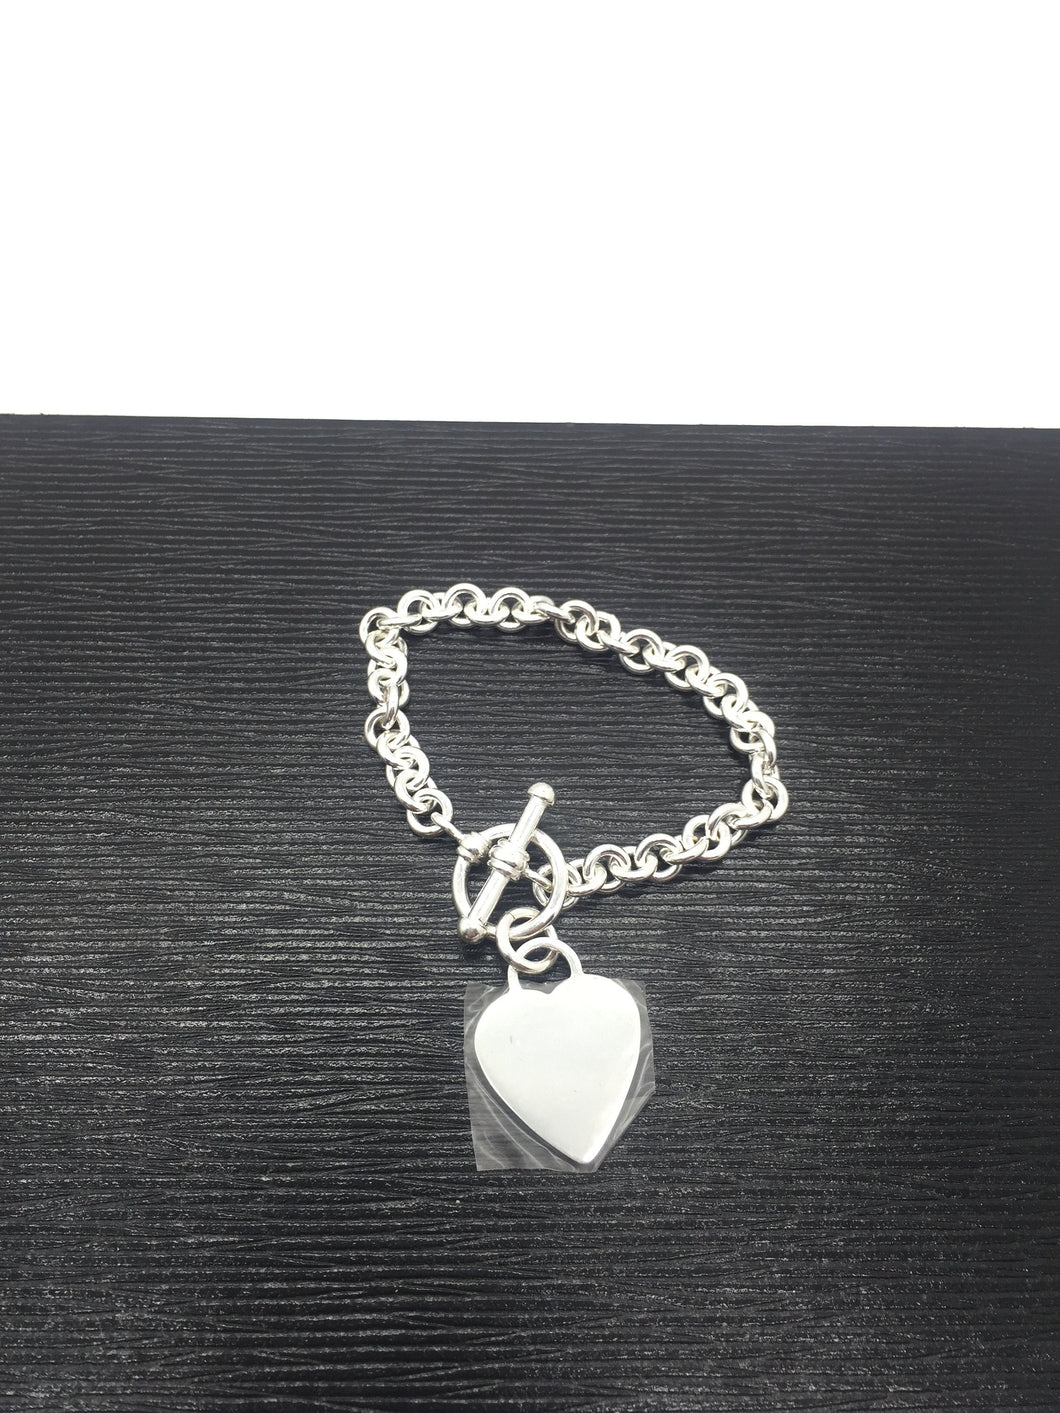 heart bracelet,silver bracelet,sterling bracelet,silver heart bracelet,sterling silver bracelet